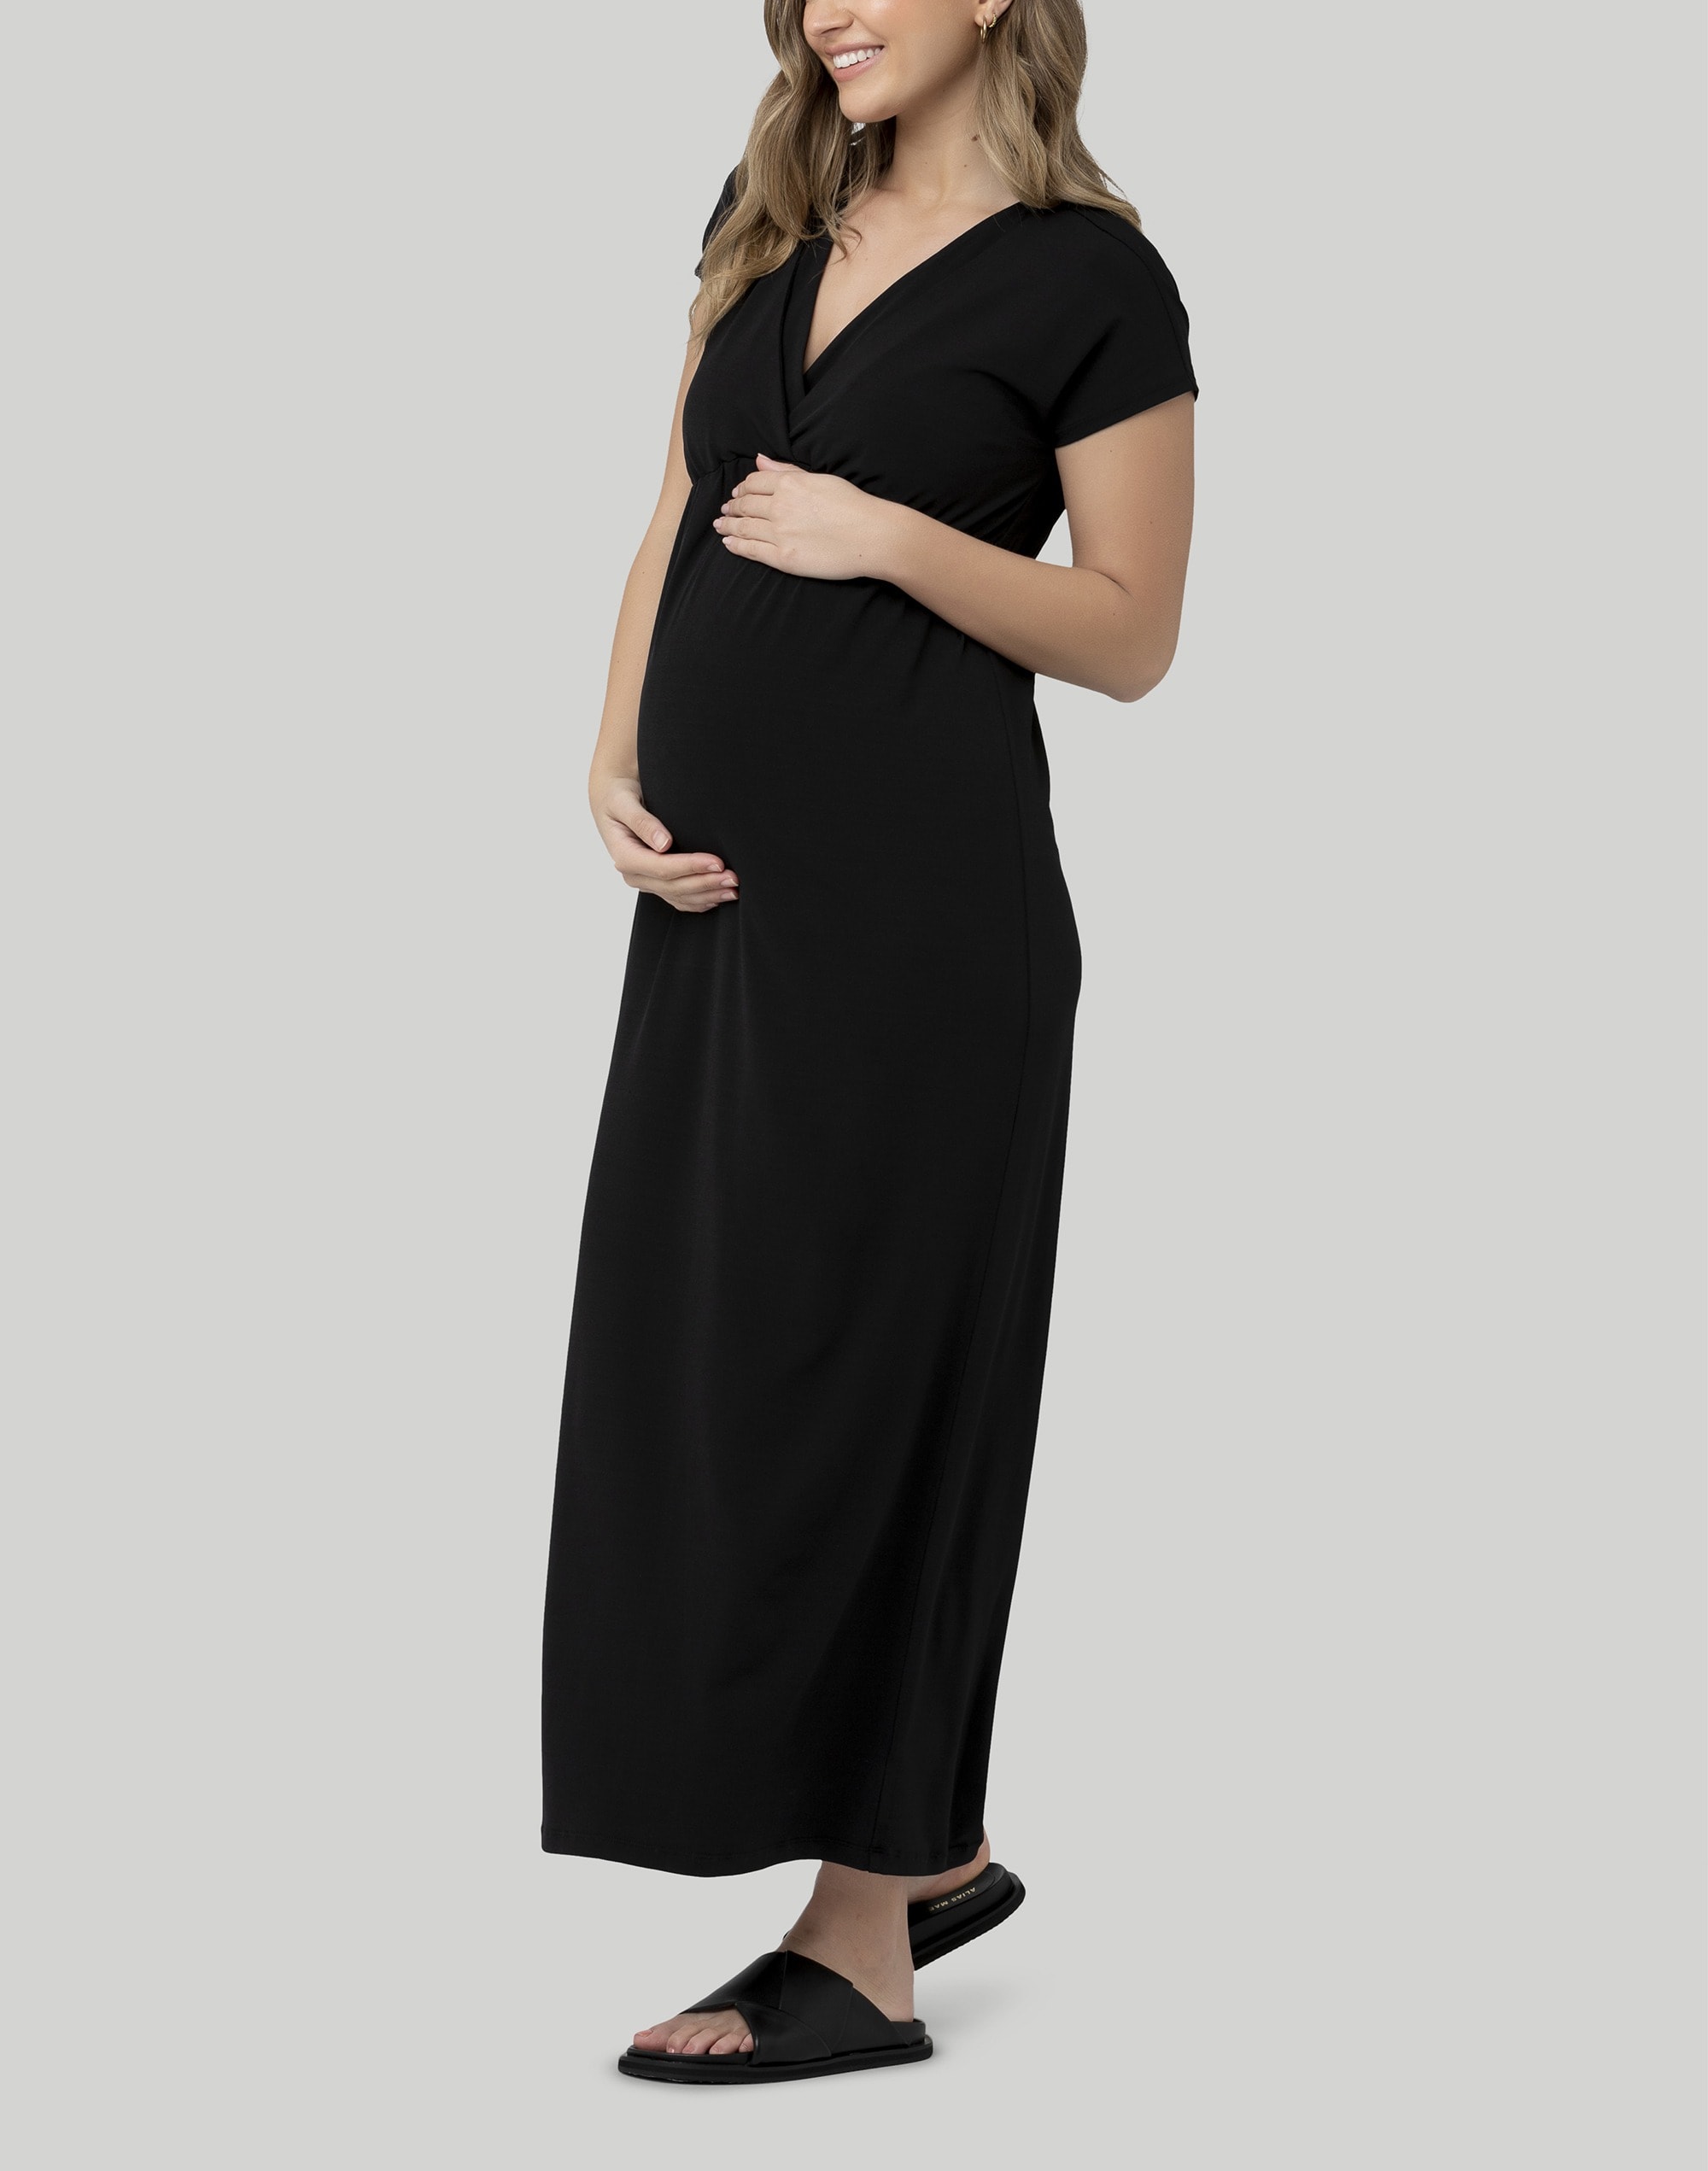 Ripe Maternity Misha Nursing Dress